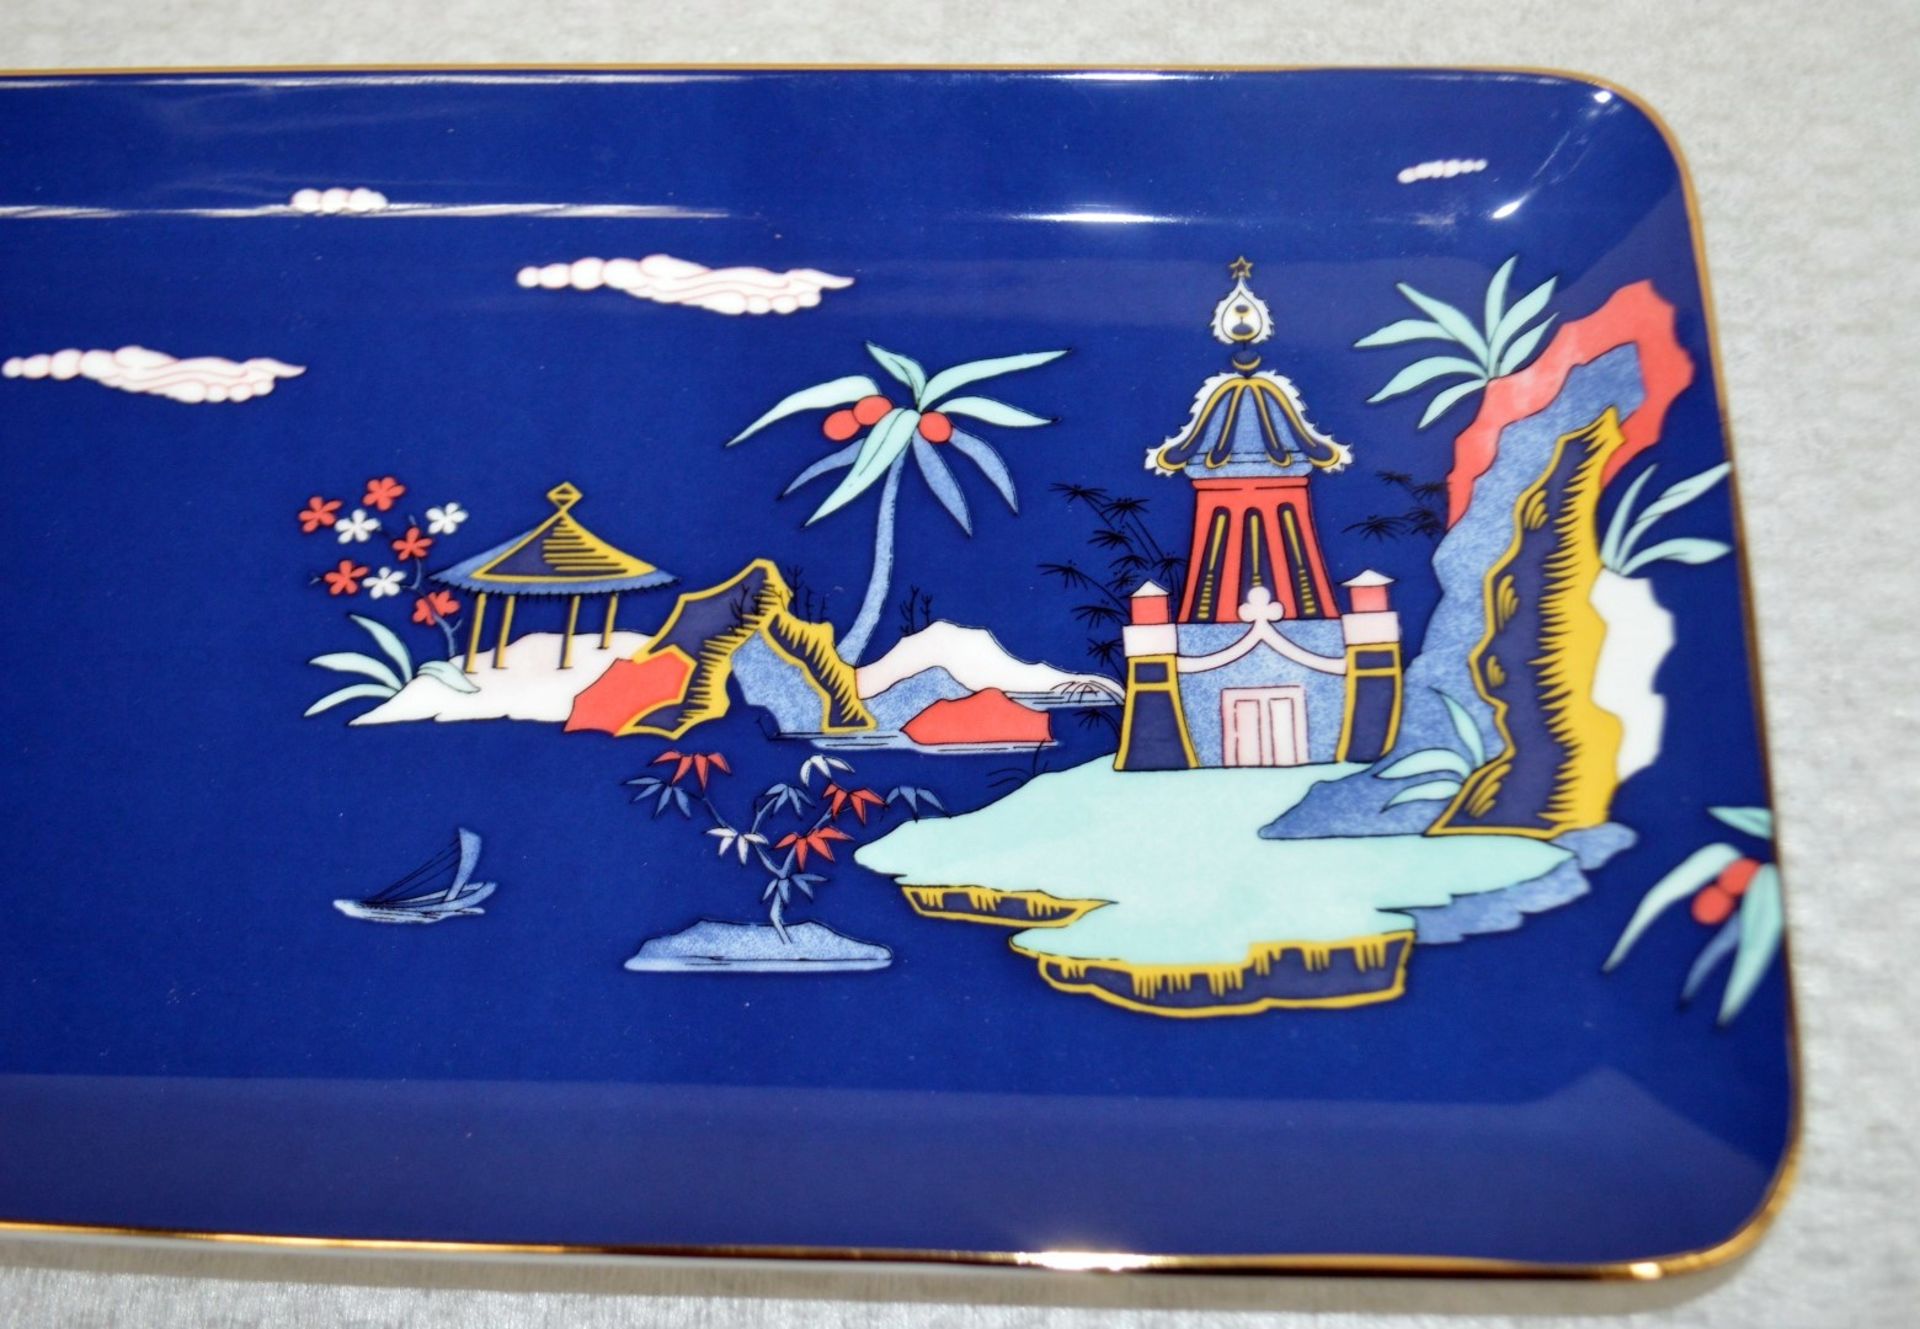 1 x WEDGWOOD 'Wonderlust' Blue Pagoda Sandwich Tray In It's Original Box - Original RRP £85.00 - Image 8 of 8